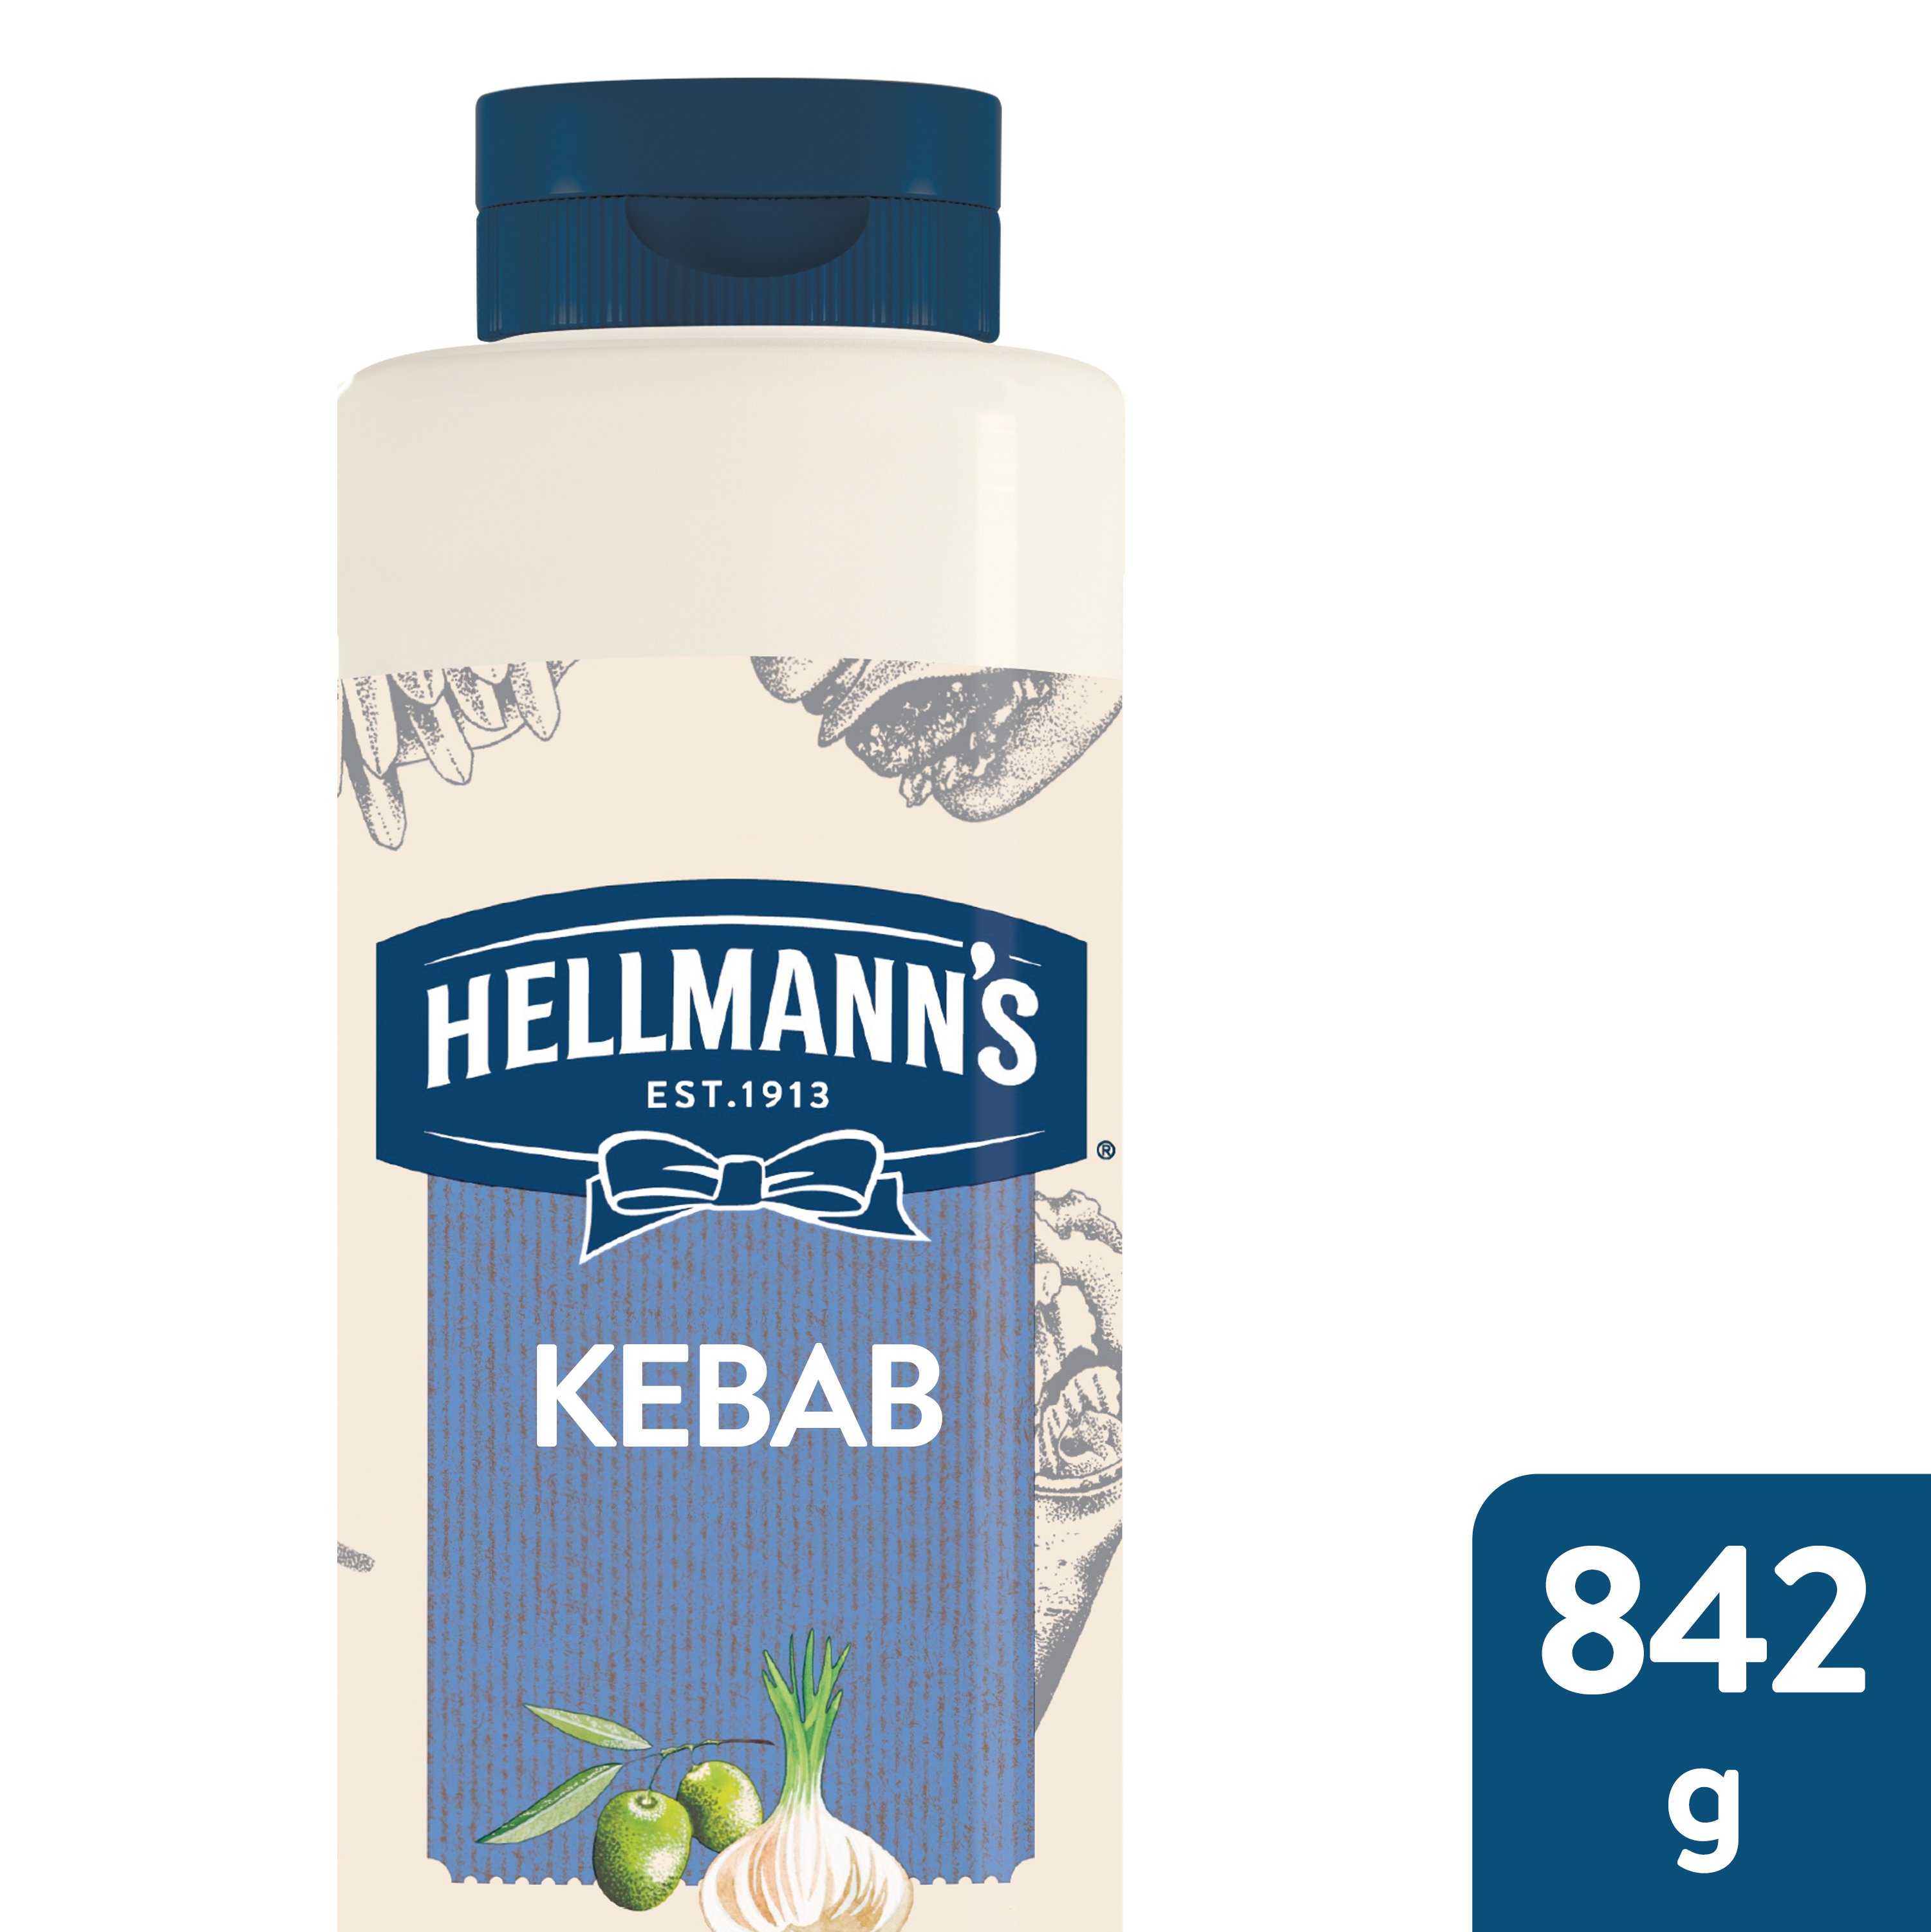 Hellmann's Kebab 842 g - 